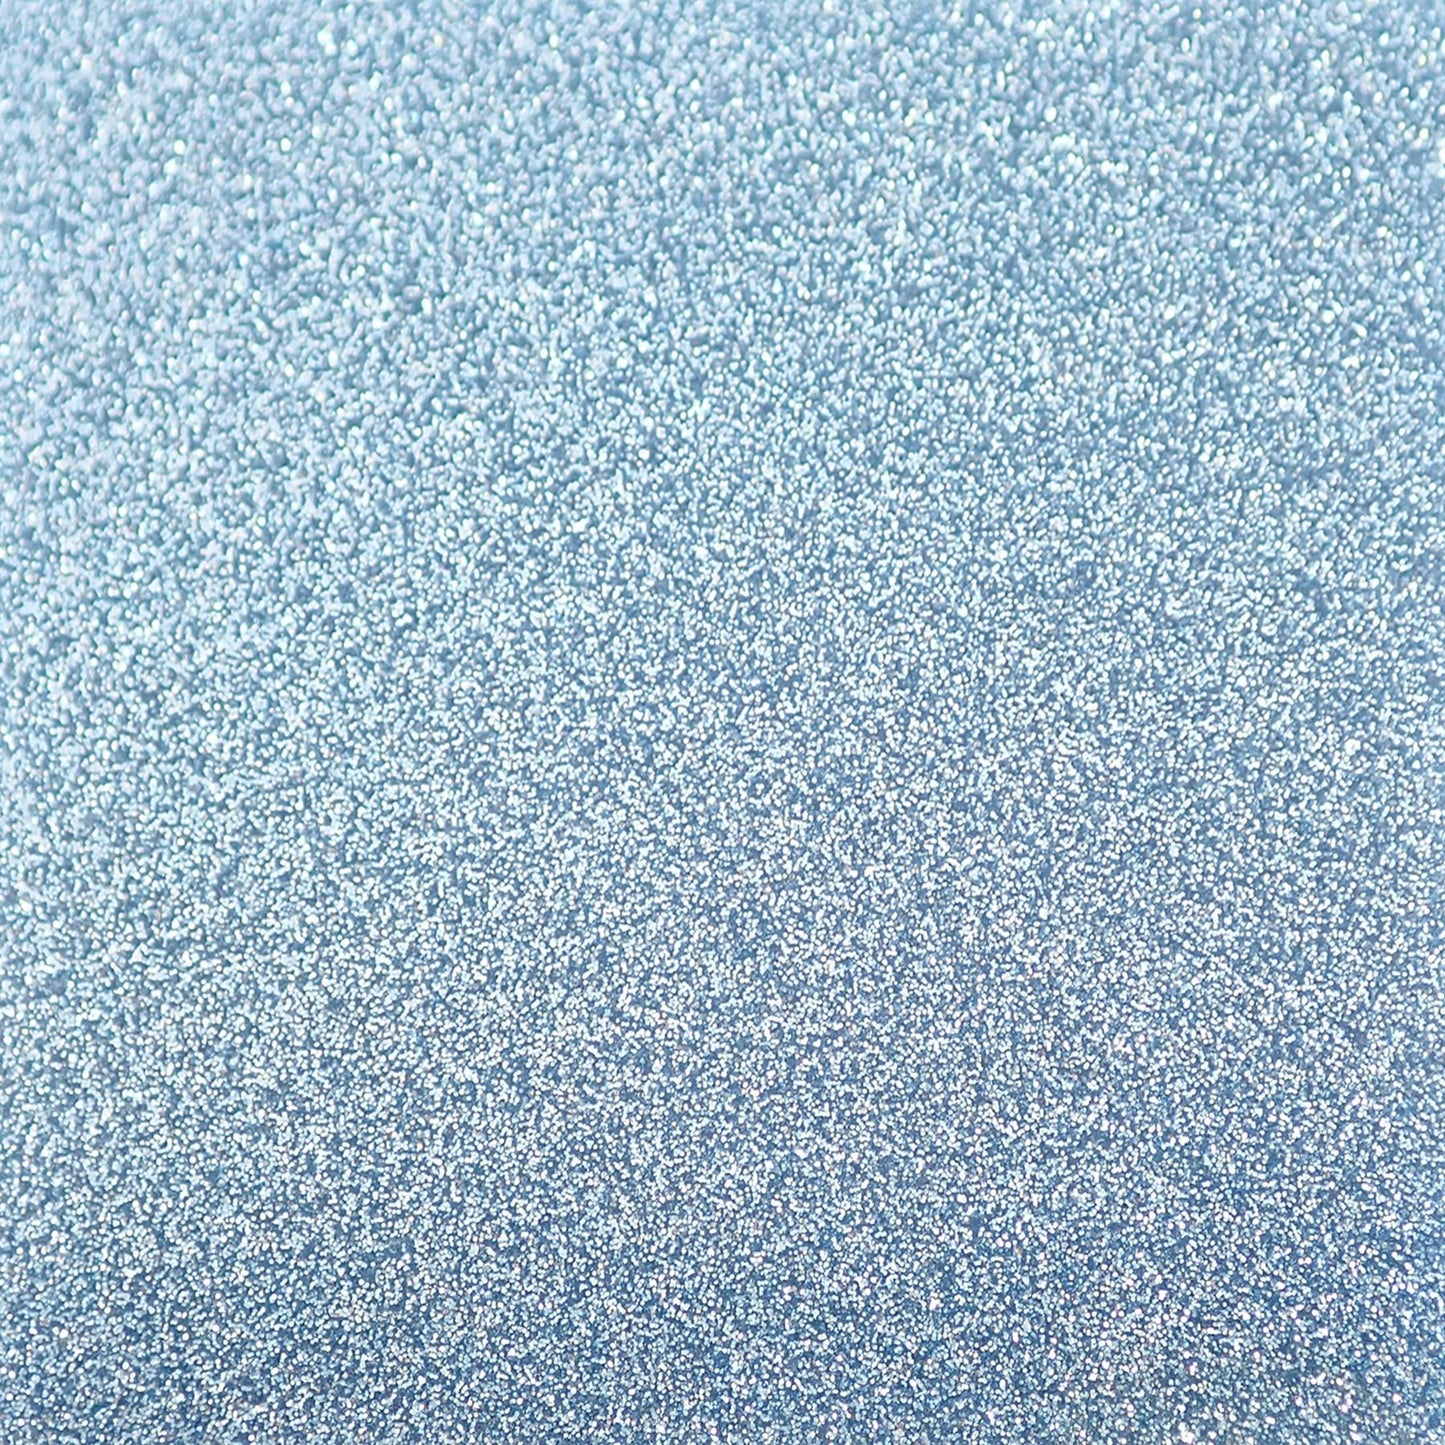 [Incudo] Baby Blue Glitter Acrylic Sheet - 600x500x3mm